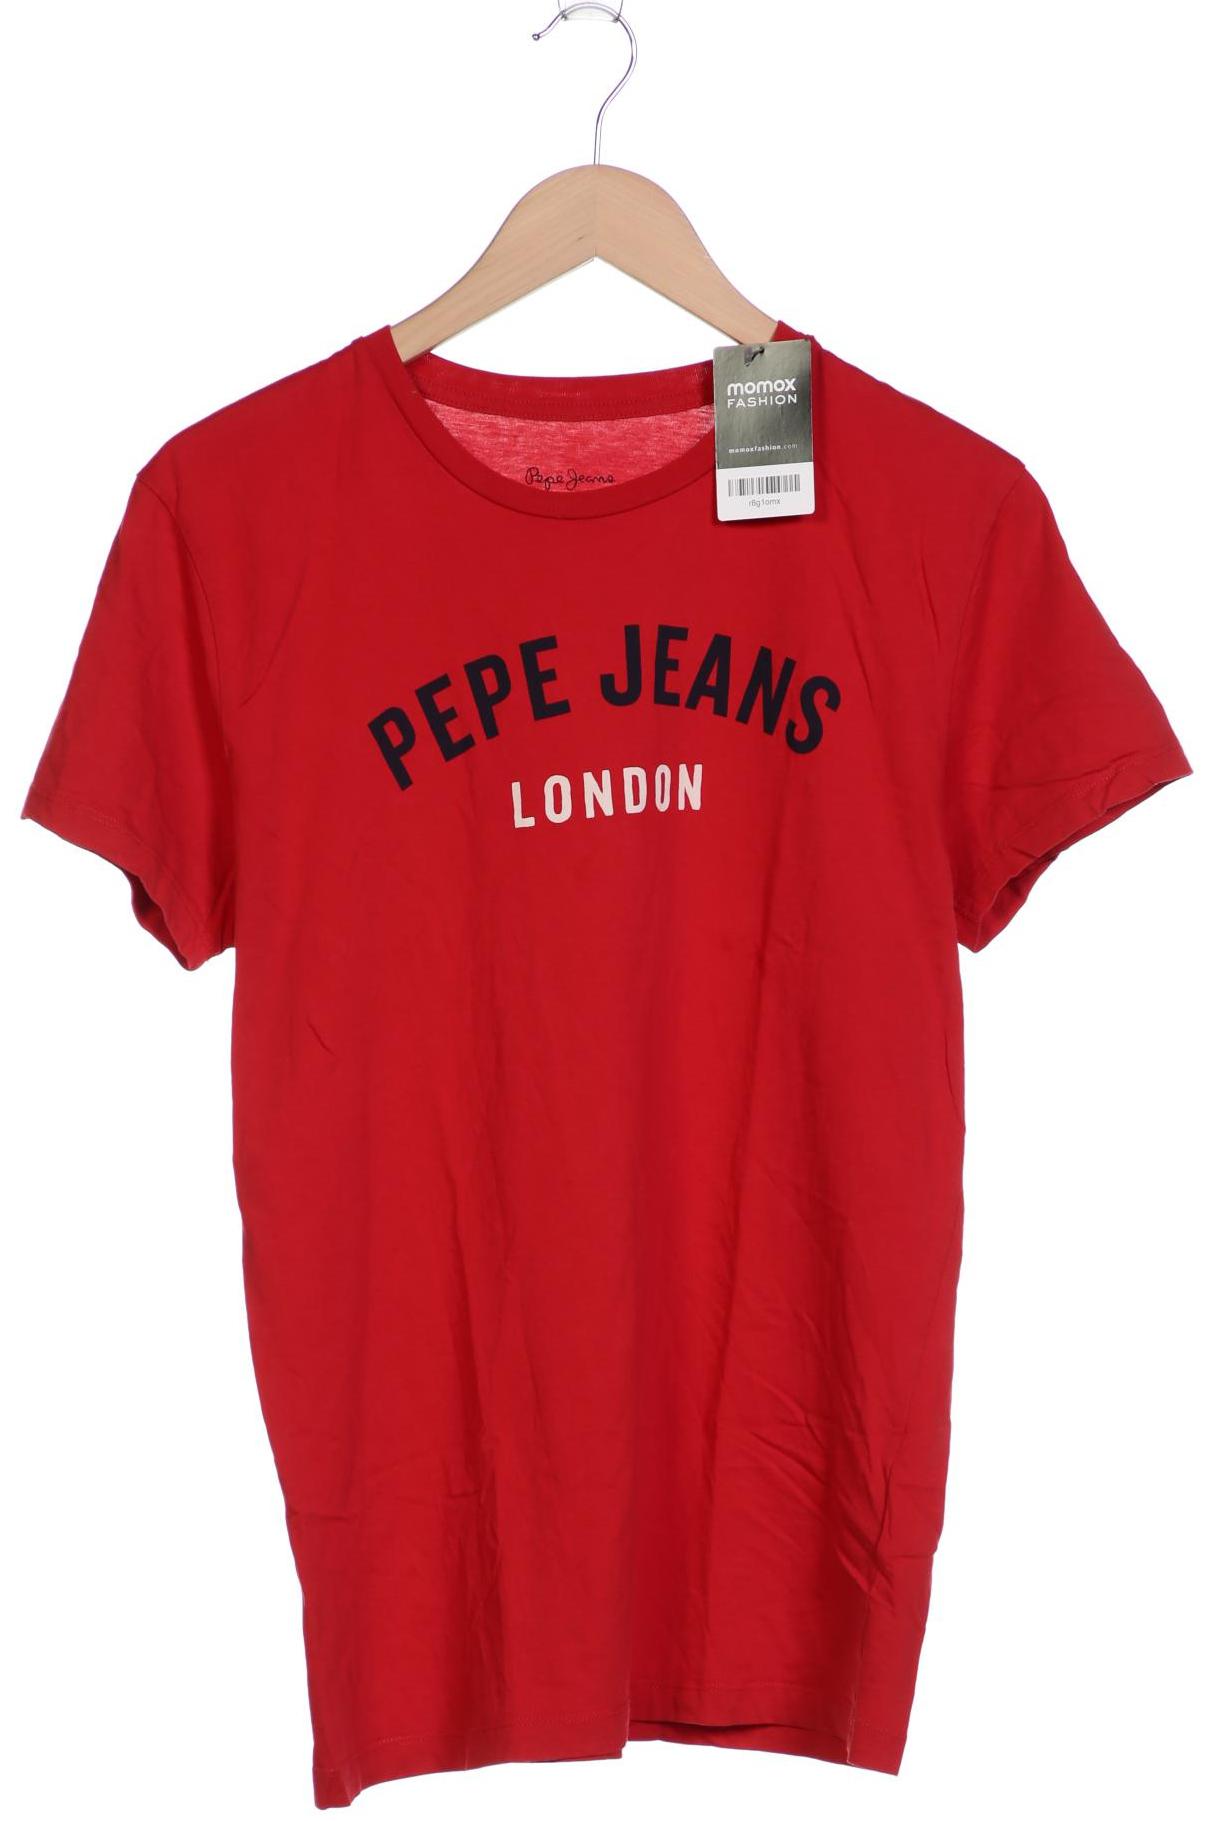 Pepe Jeans Herren T-Shirt, rot von Pepe Jeans